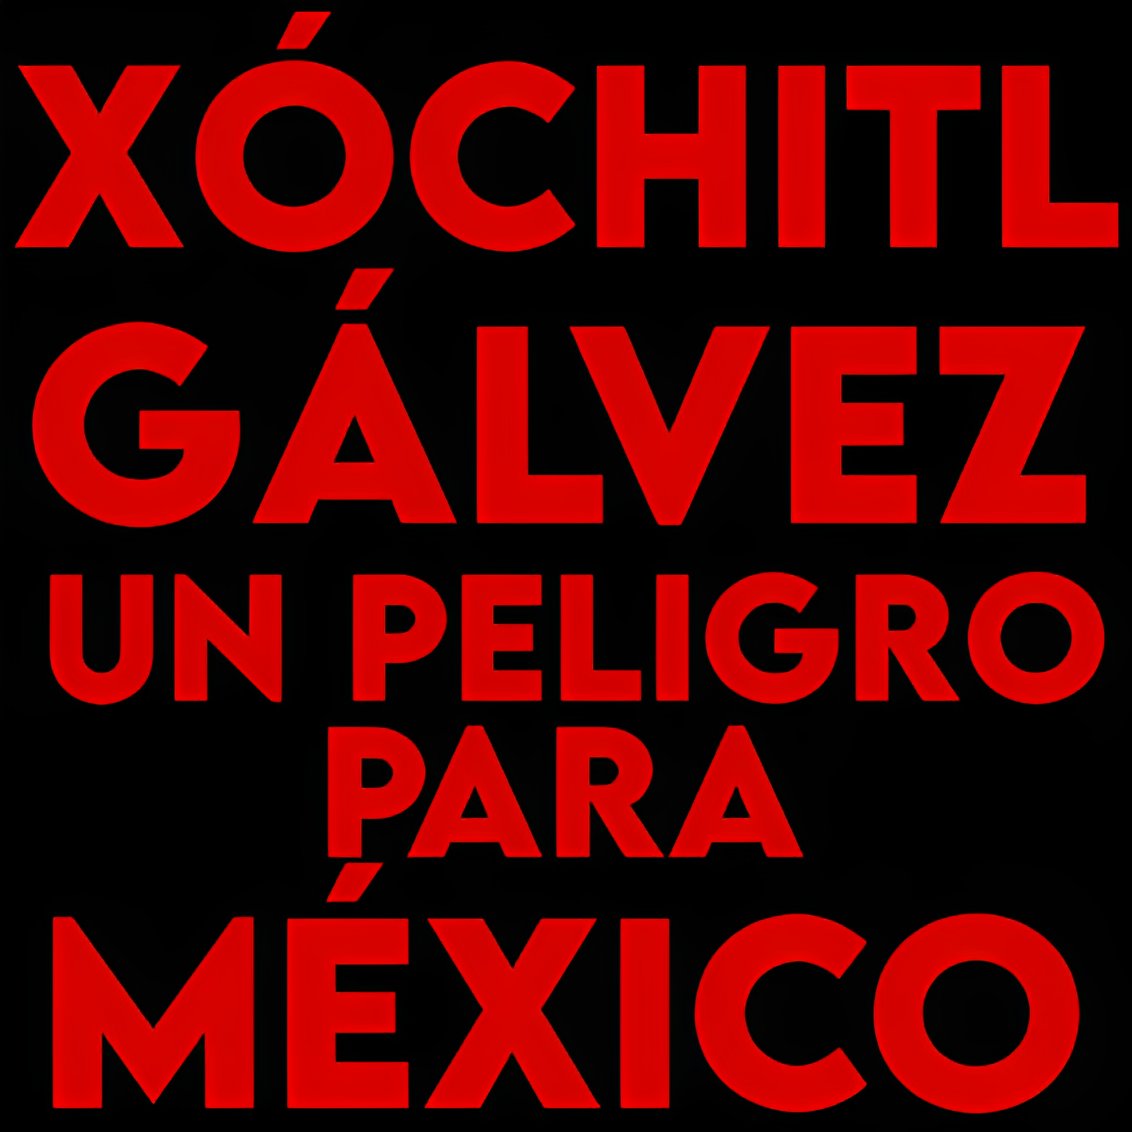 🔴 👇 #SomosMillonesConLa4T 
#SomosMillonesConAMLO 
#PrensaBasuraYCorrupta 
#XochitlCorrupta
#PlanC_YaEstaEnMarcha
#TodosConAMLO 
#TodosConMexico 
#ClaudiaGanaElDebate #Nacional 
#BotargaBrutaYCogupta #XochitlMentirosa #XochitlGalvezPresidenta #XochitlYaPerdio…